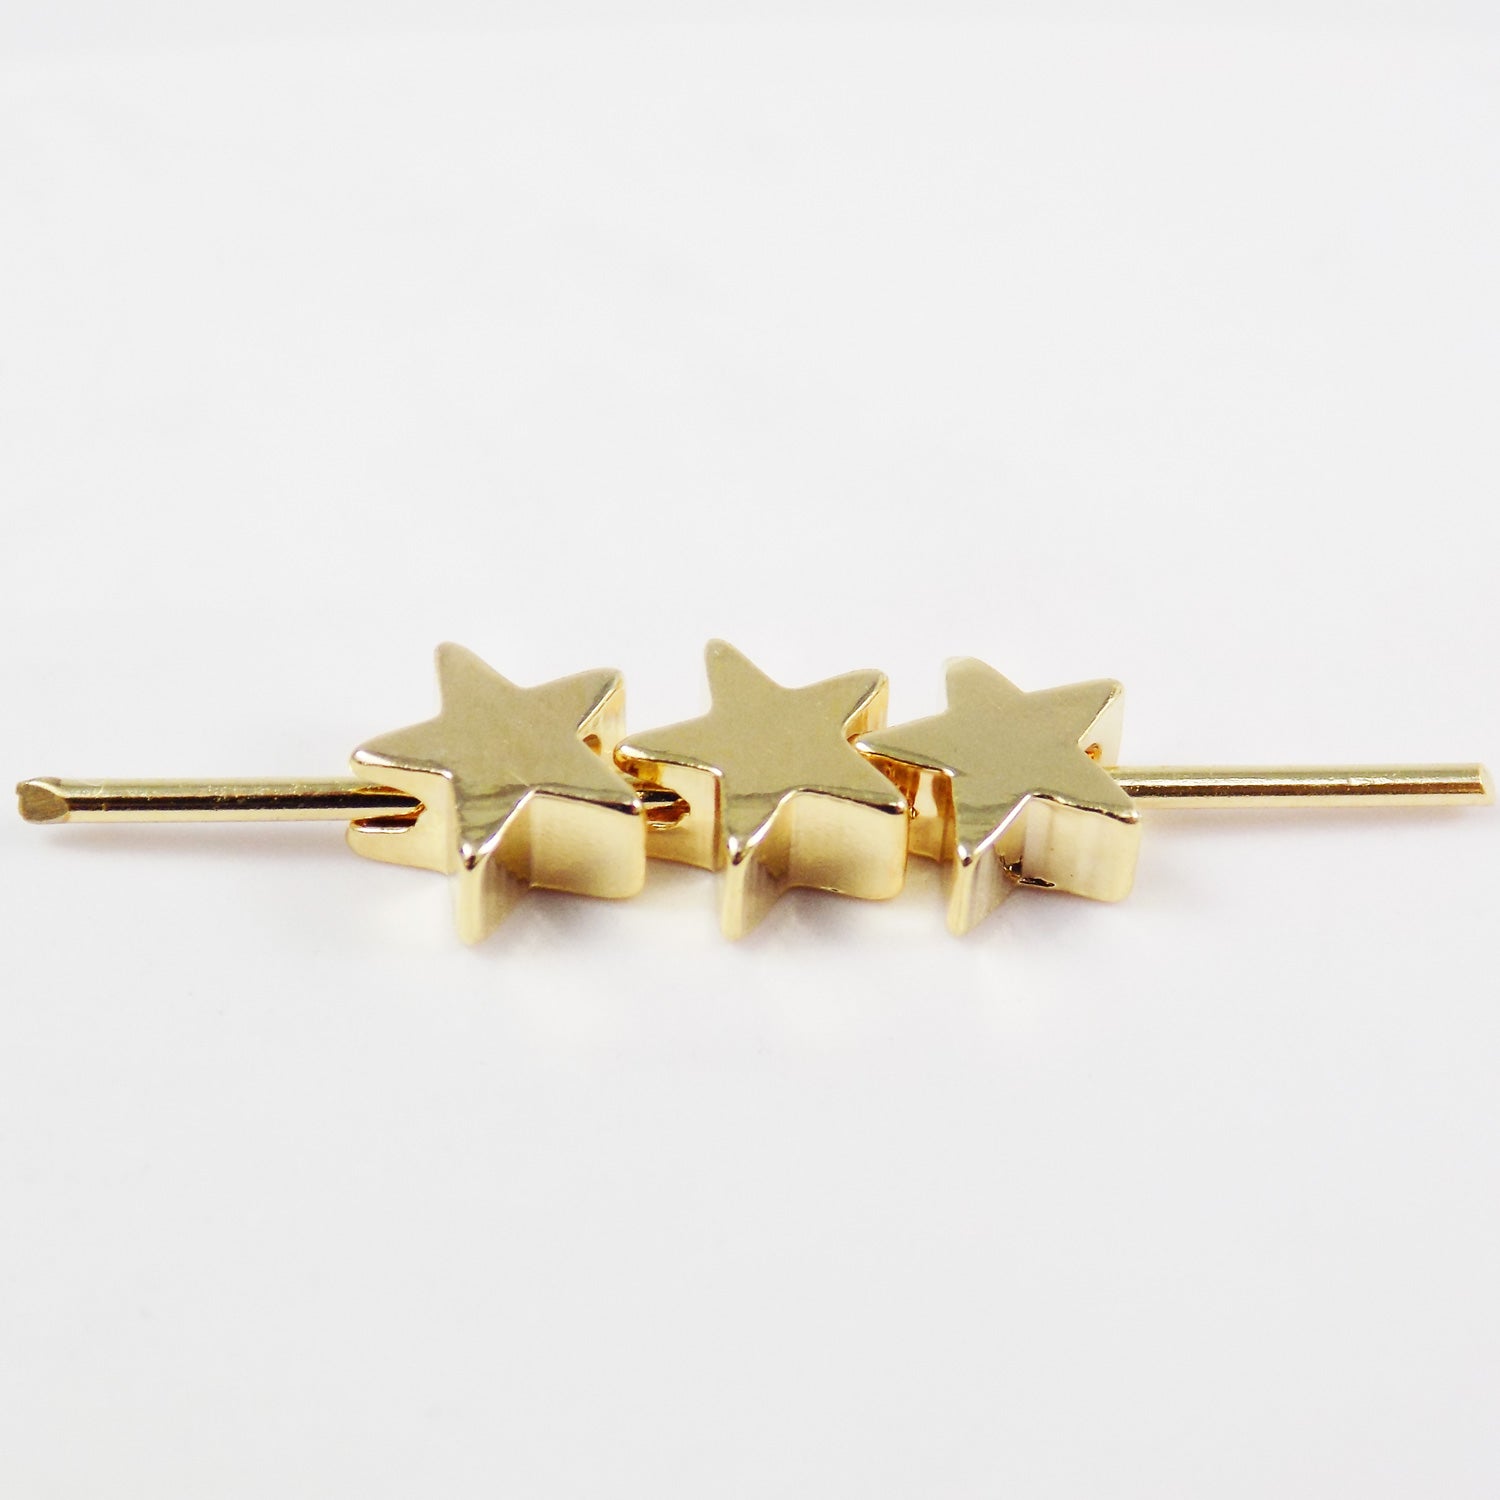 Star Slider Charm (6 pieces) Gold Plated Mini Star Spacer Beads for Bracelets, 7.8x8mm Sliding Little Star Separator, Celestial Beads Wholesale